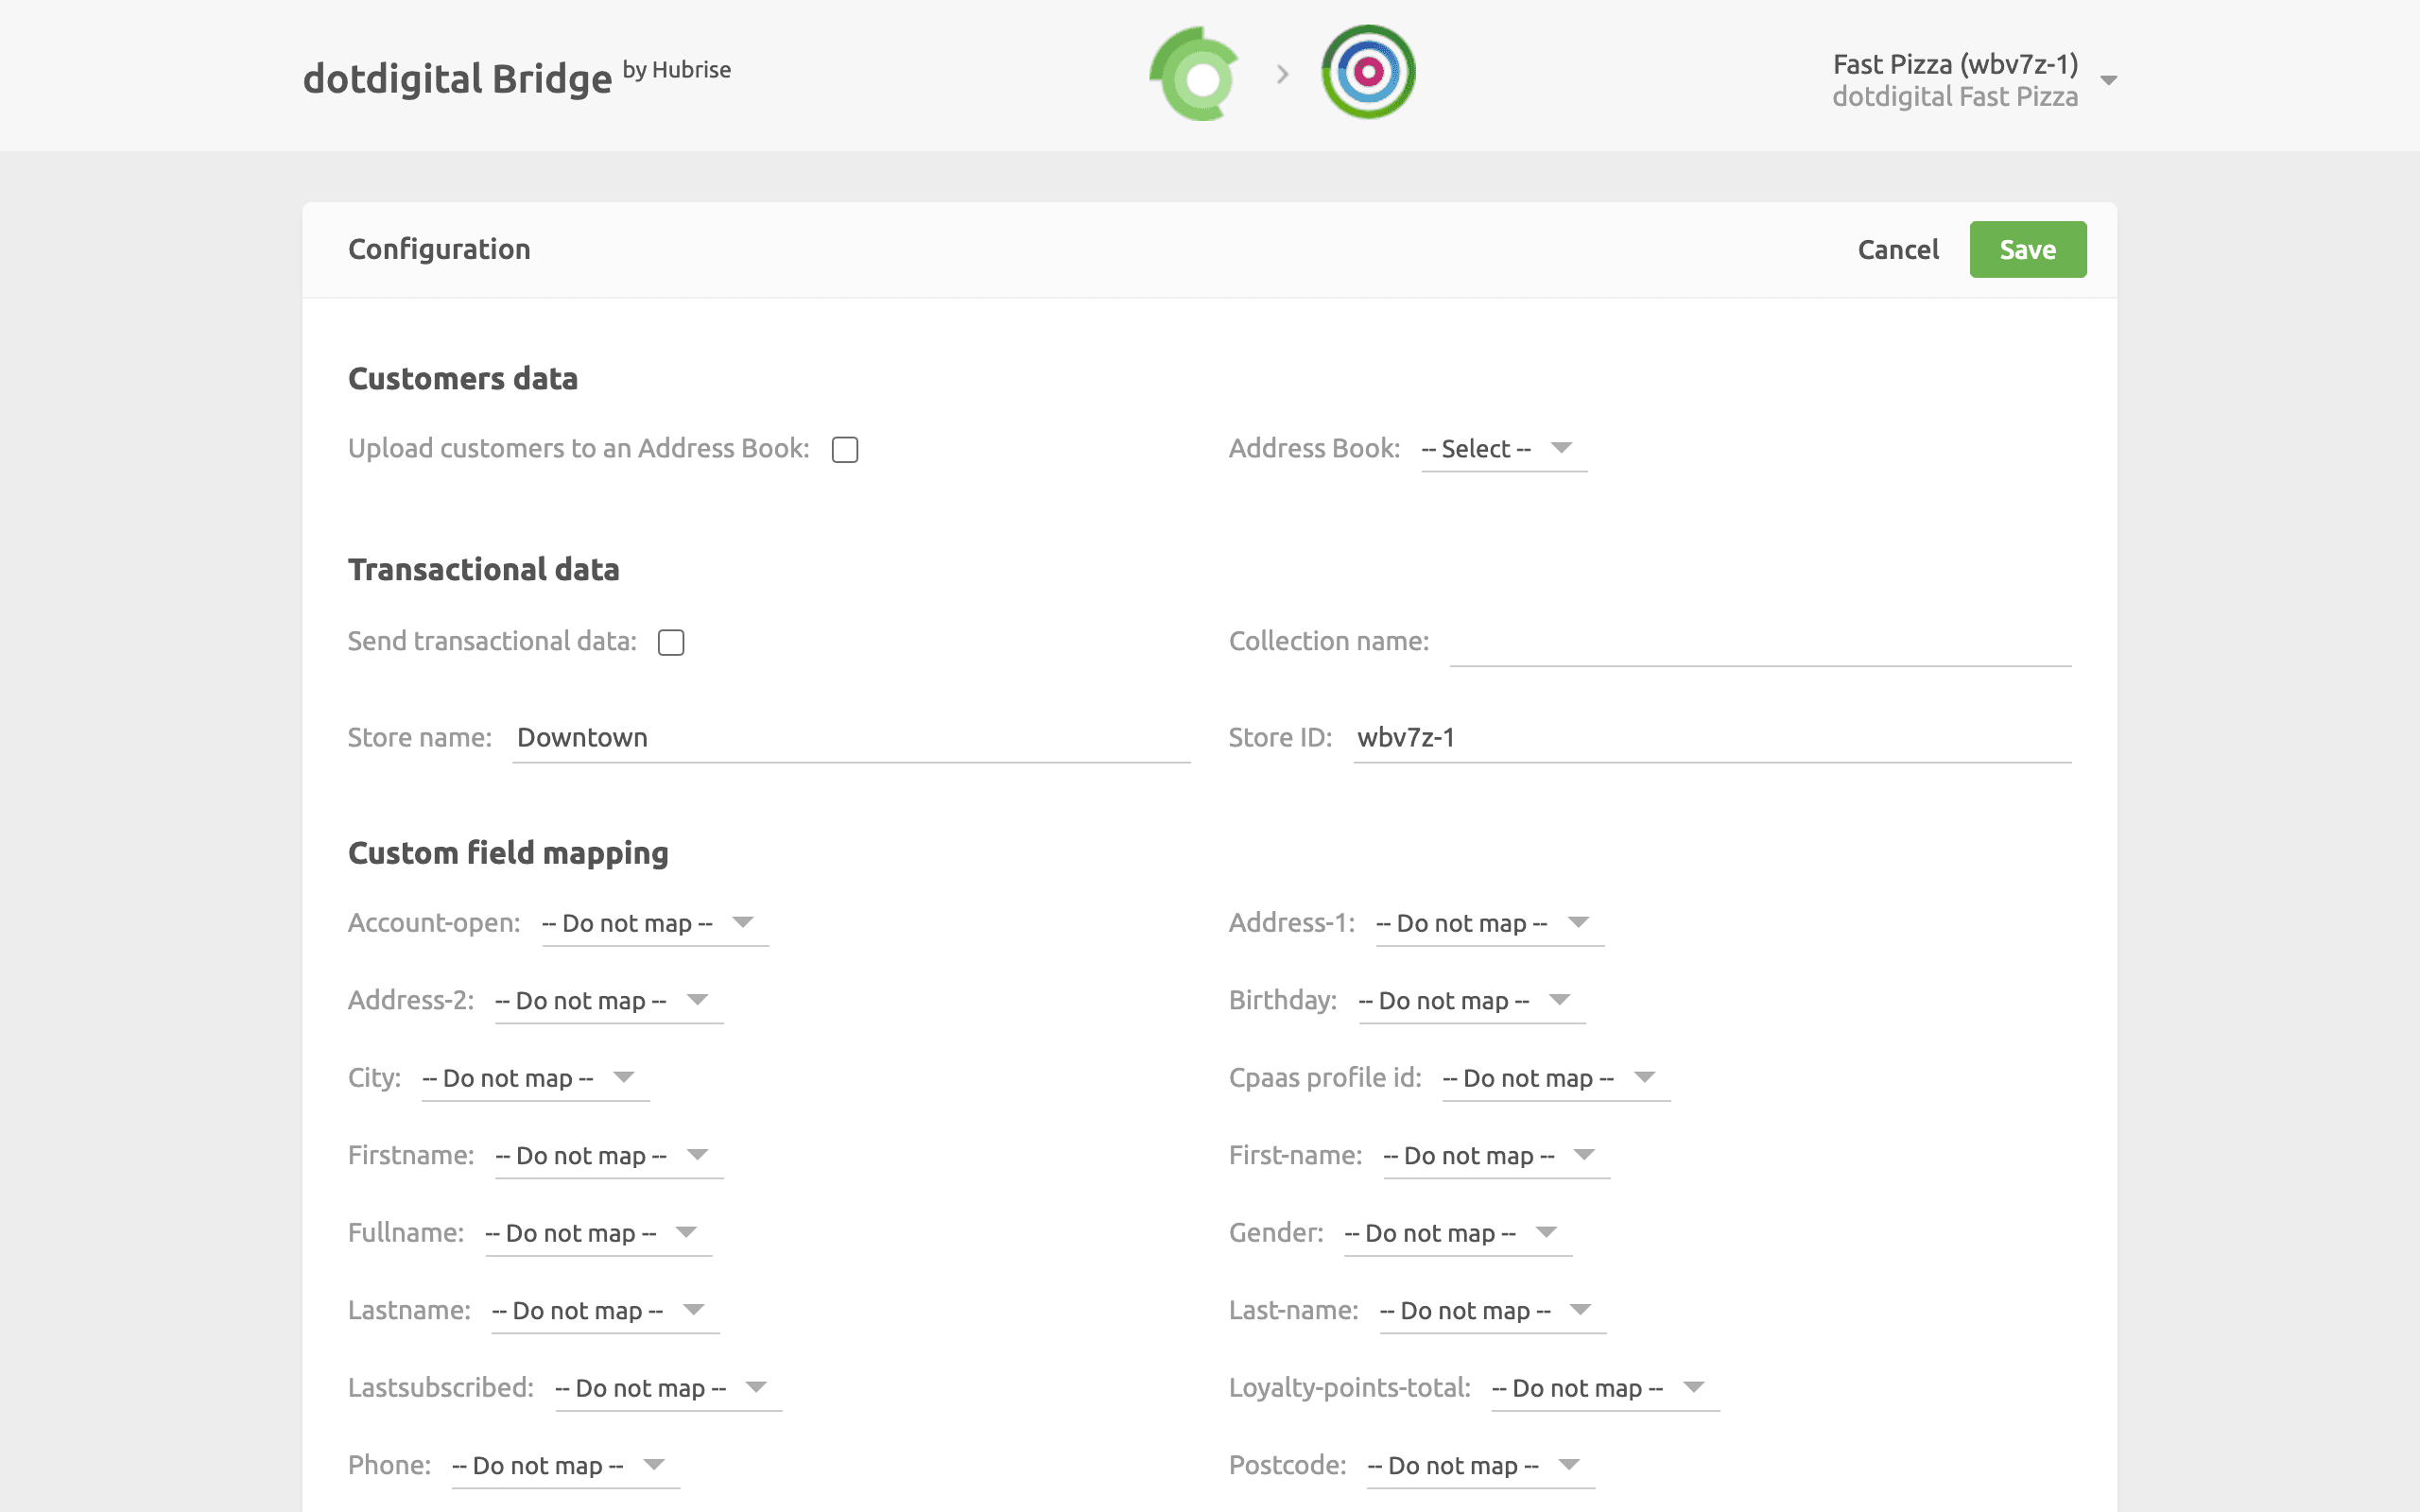 dotdigital Bridge configuration page